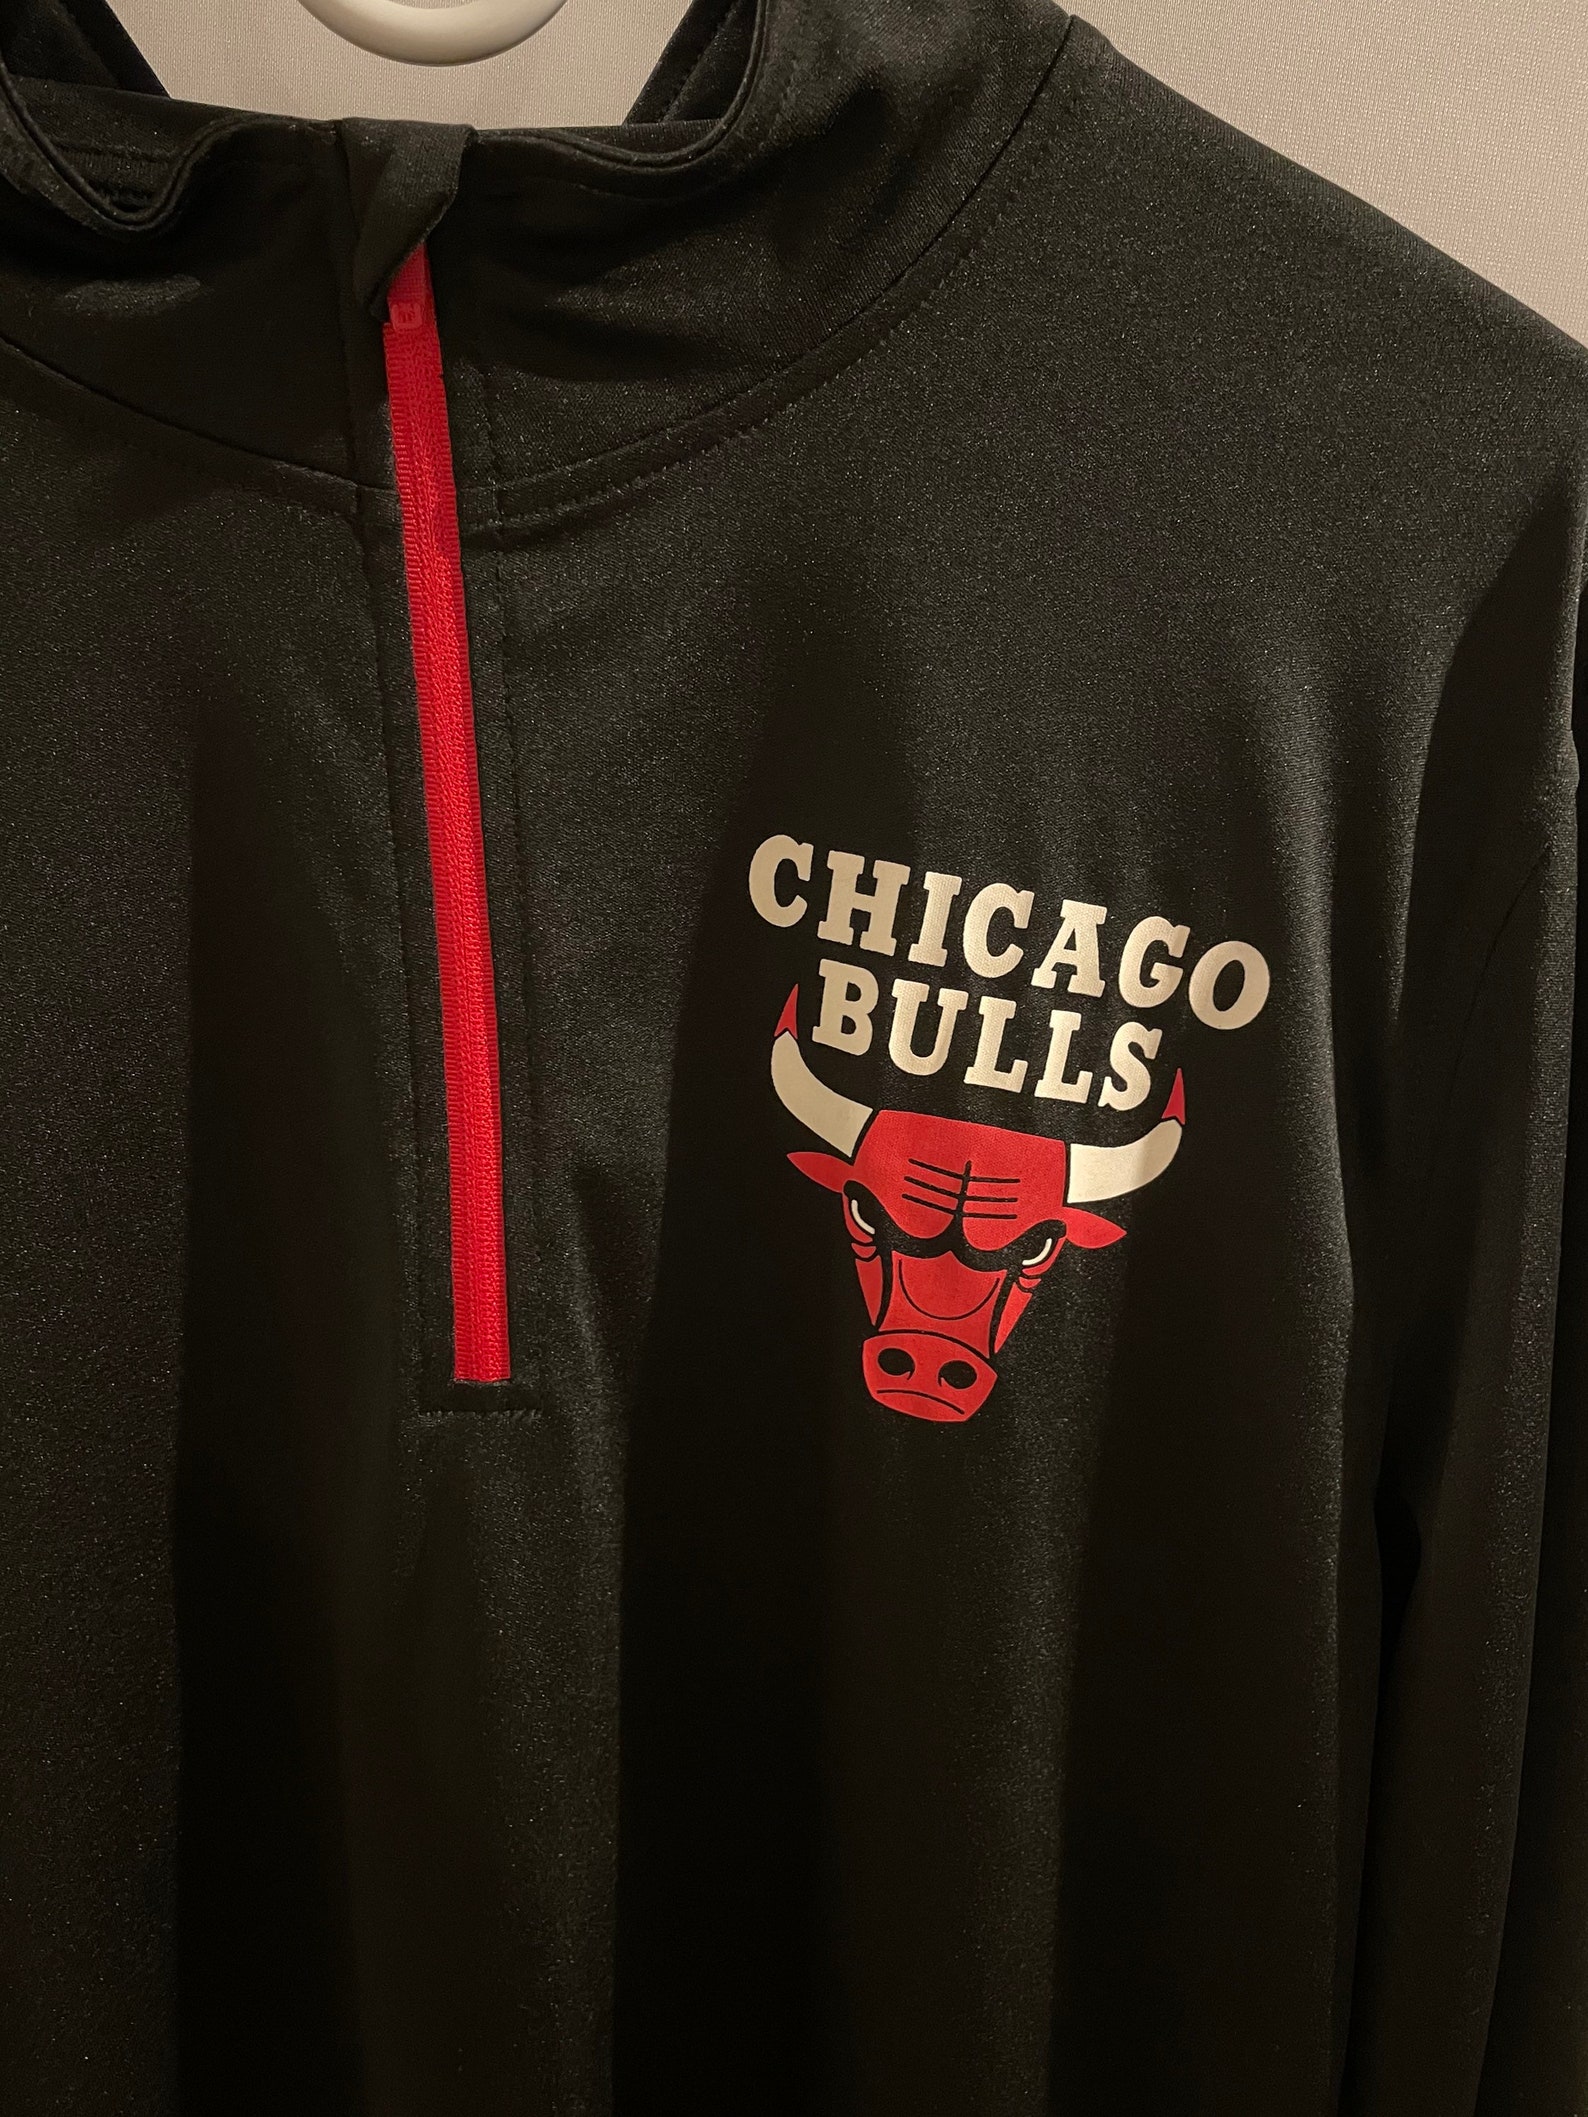 NBA Chicago Bulls pullover sweater | Etsy